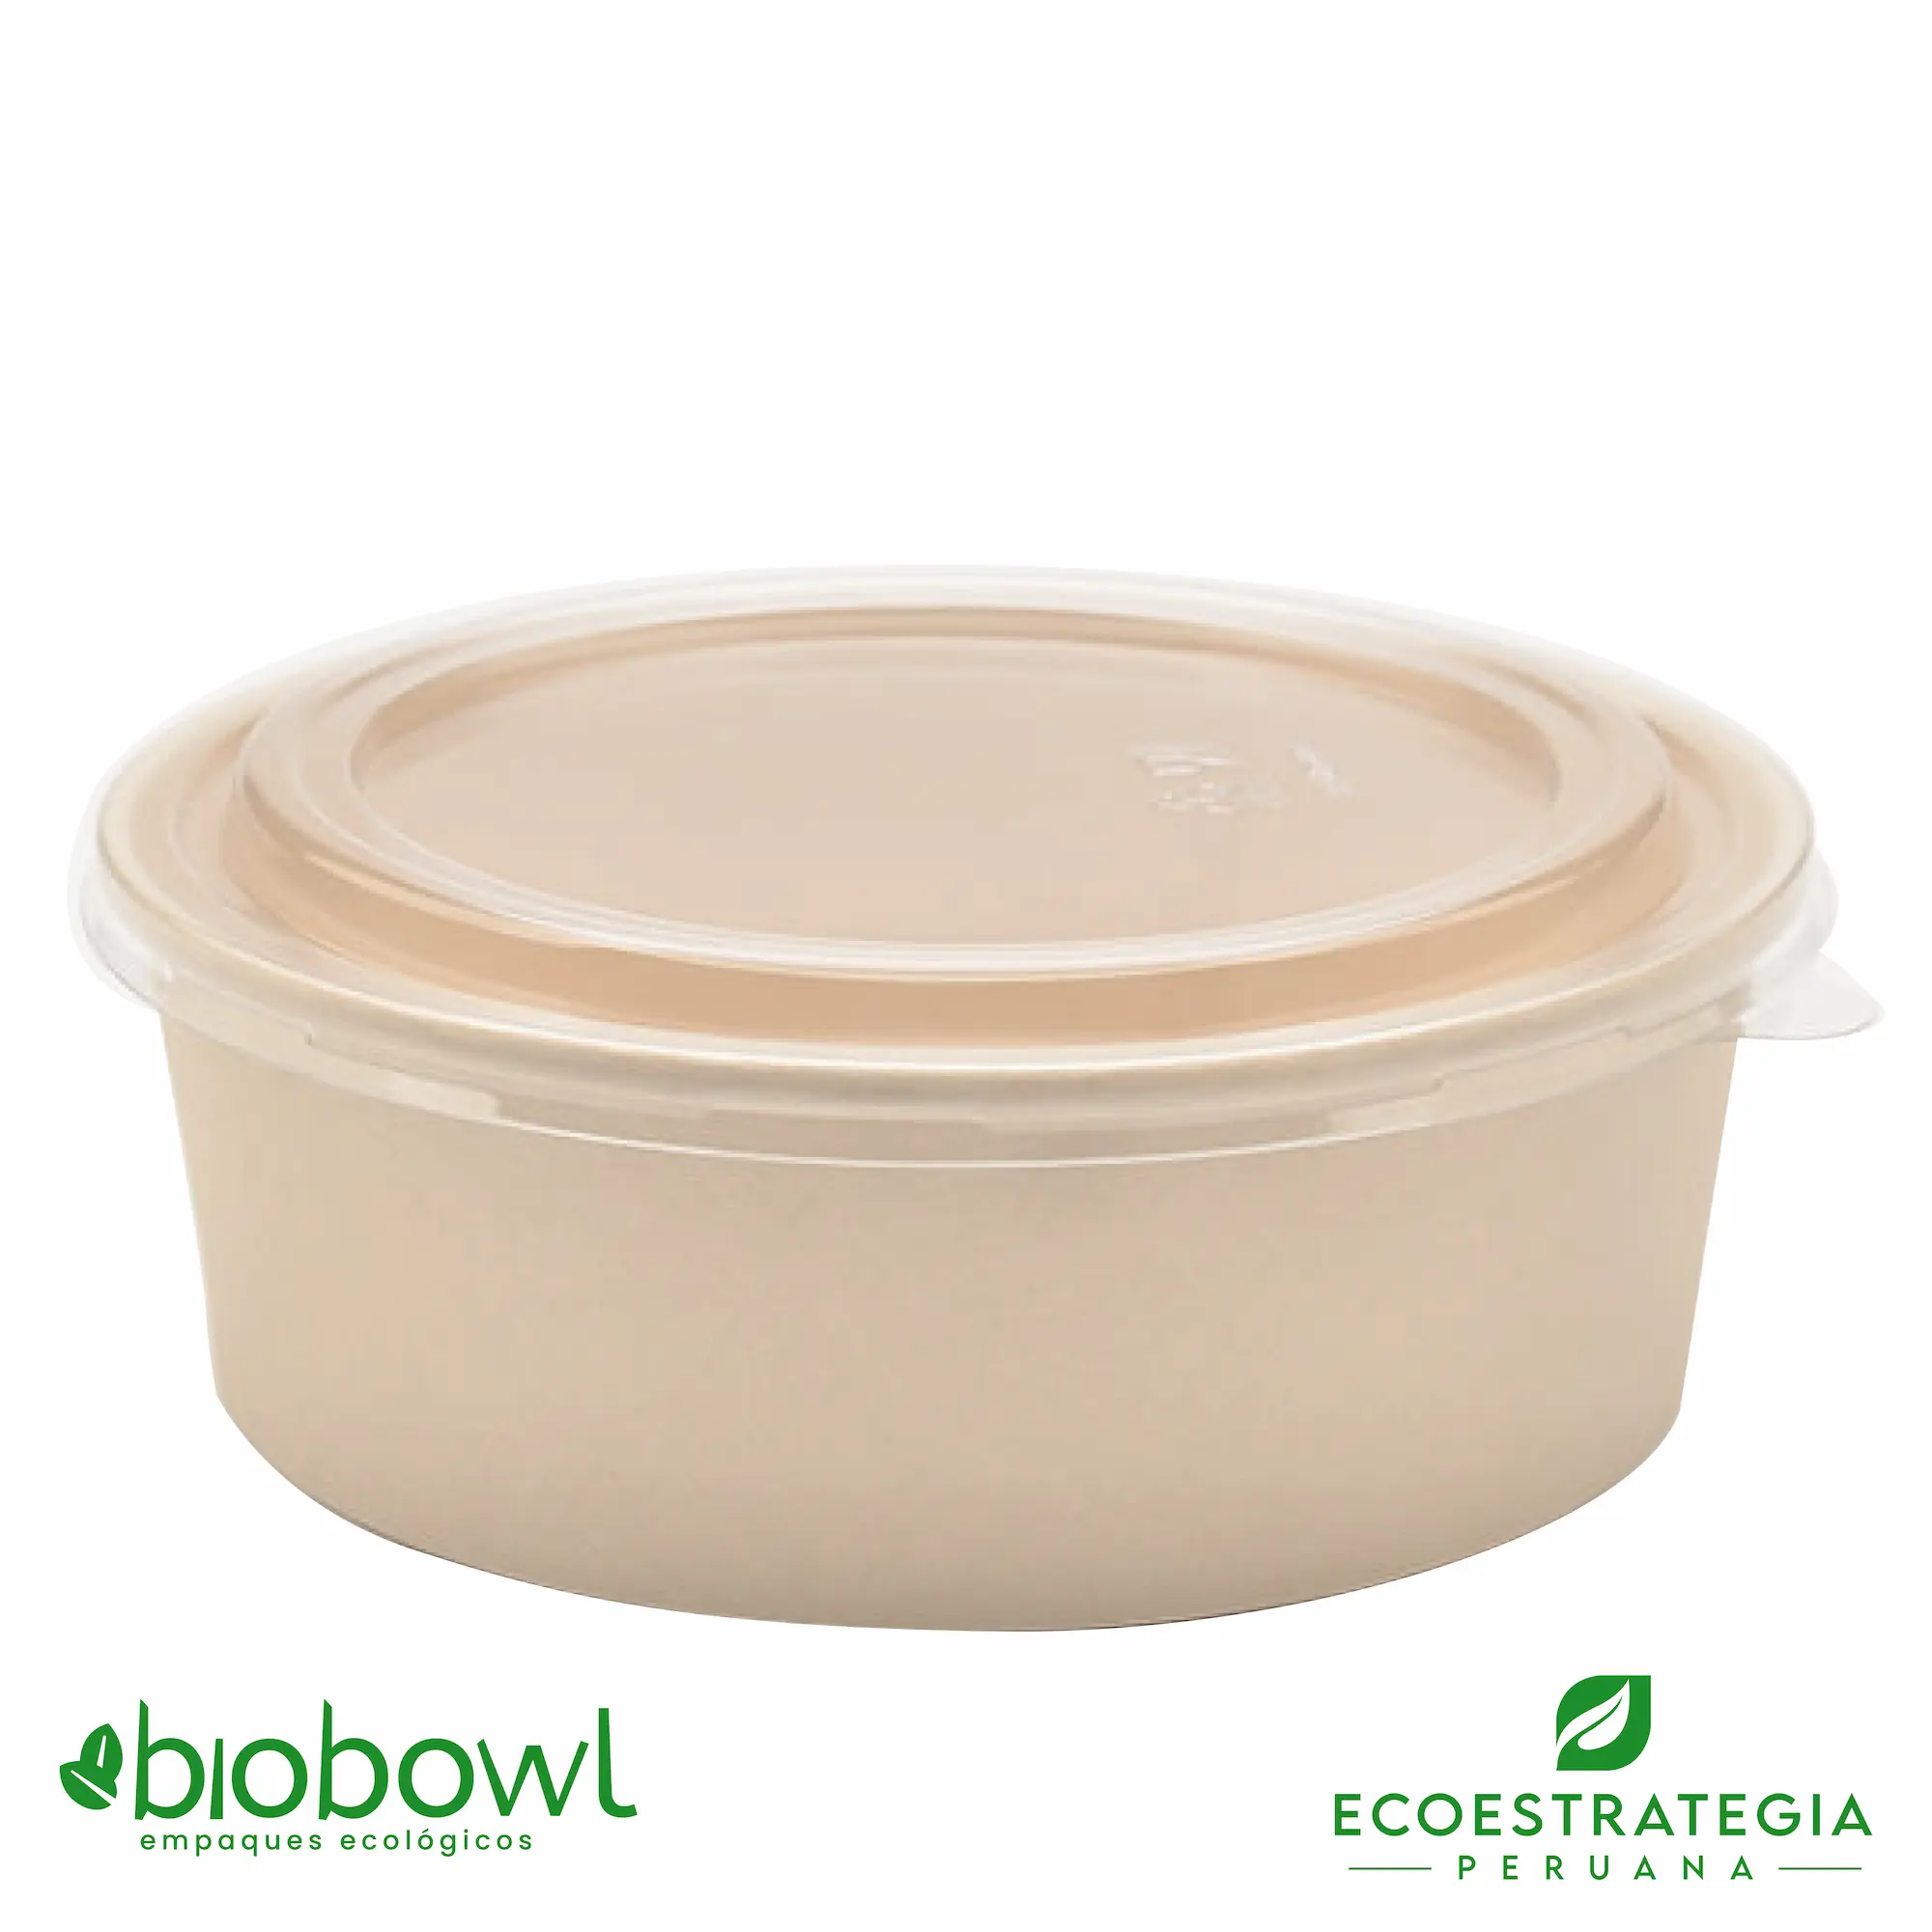 Esta bowl biodegradable de 1300 ml es a base de fibra de bambu. Envases descartables con gramaje ideal, cotiza tus empaques, platos y tapers para alimentos